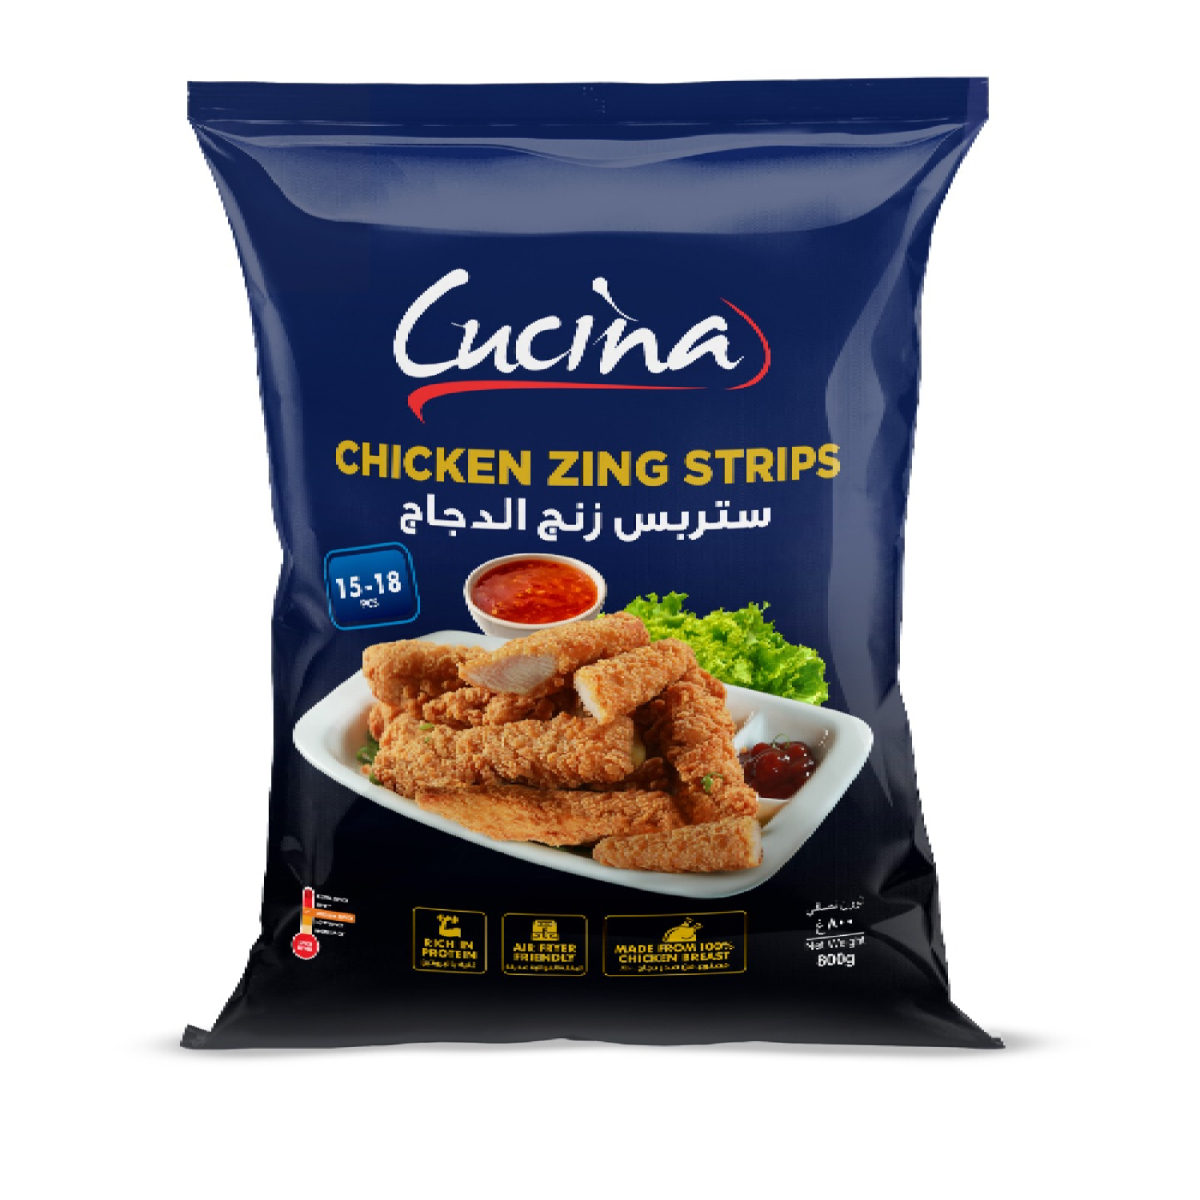 Cucina Chicken Zing Strips 15-18 pcs 800 g